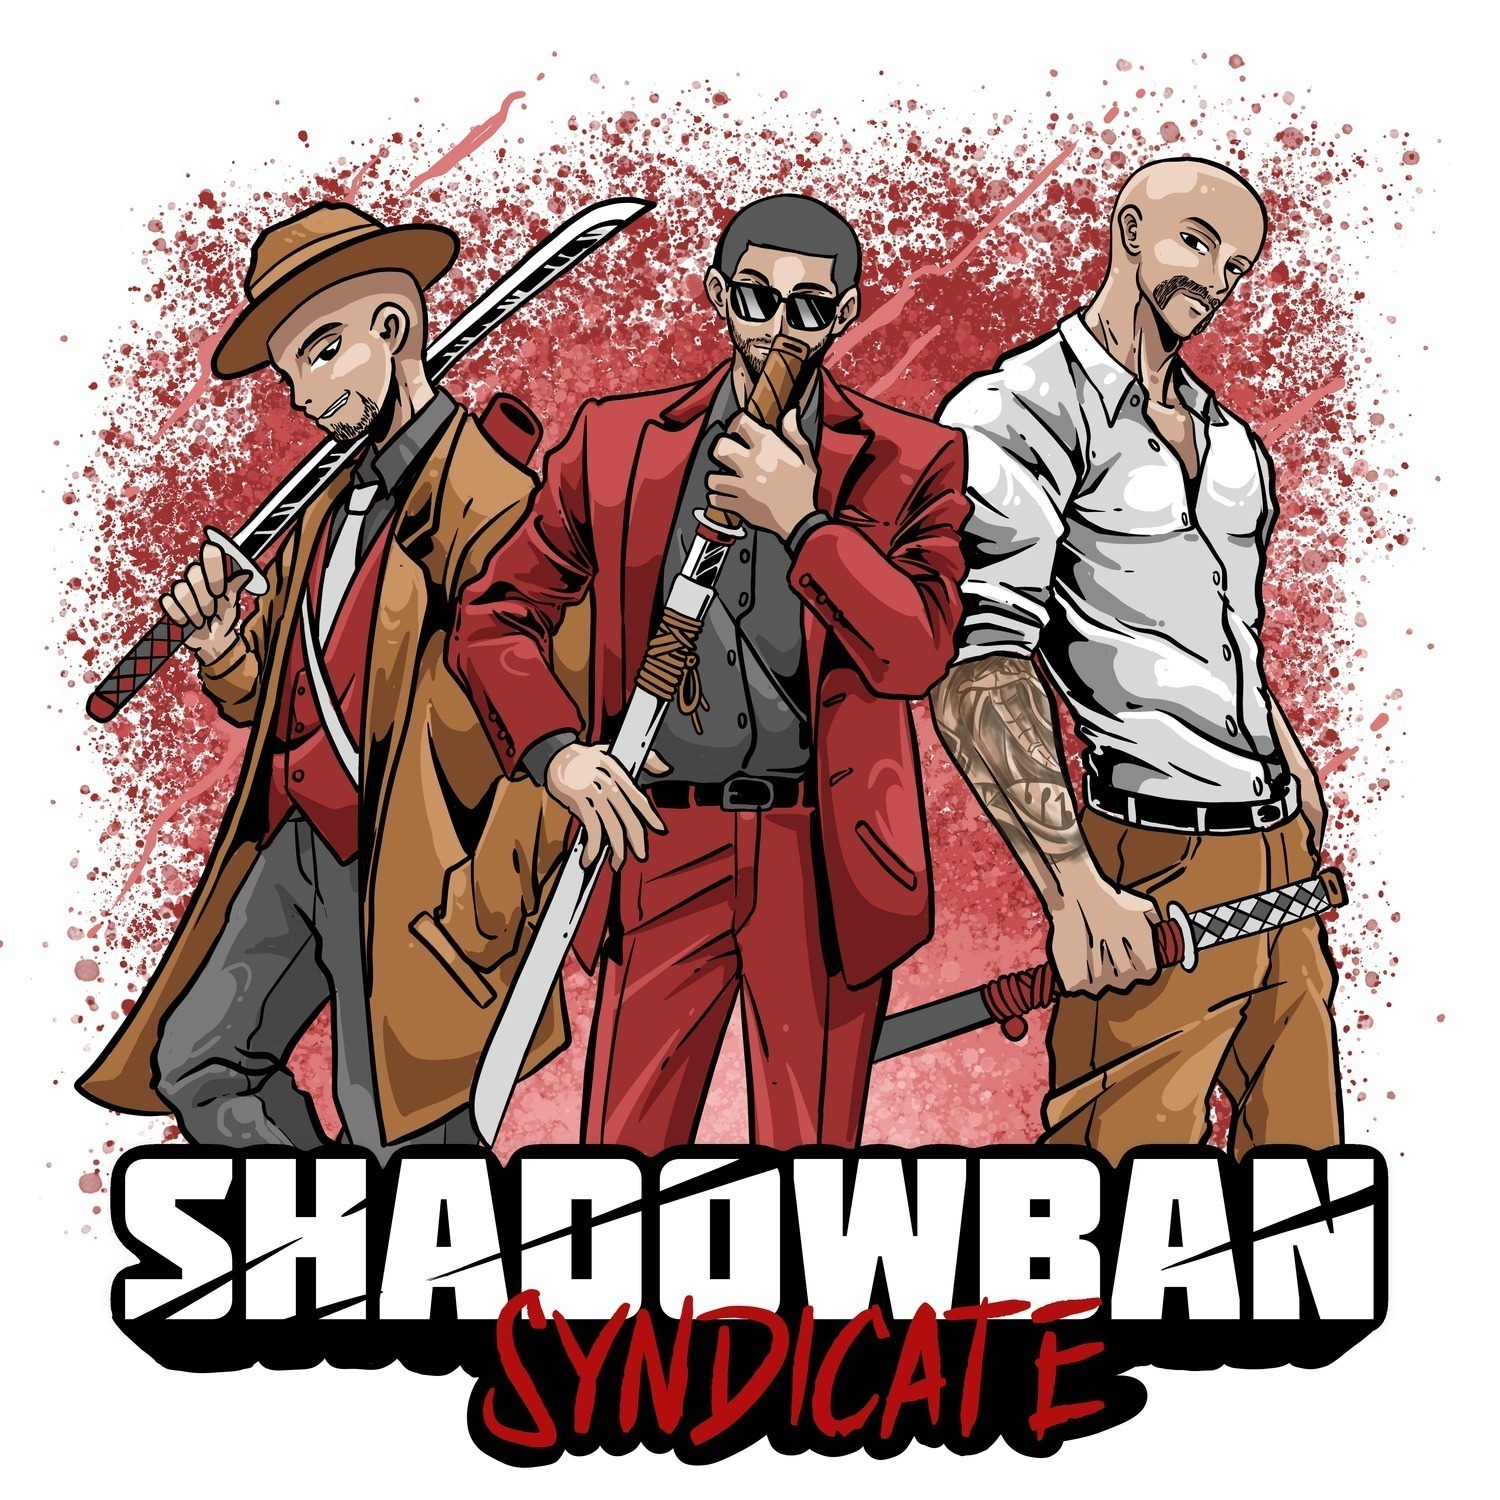 Shadowban Syndicate #3: 